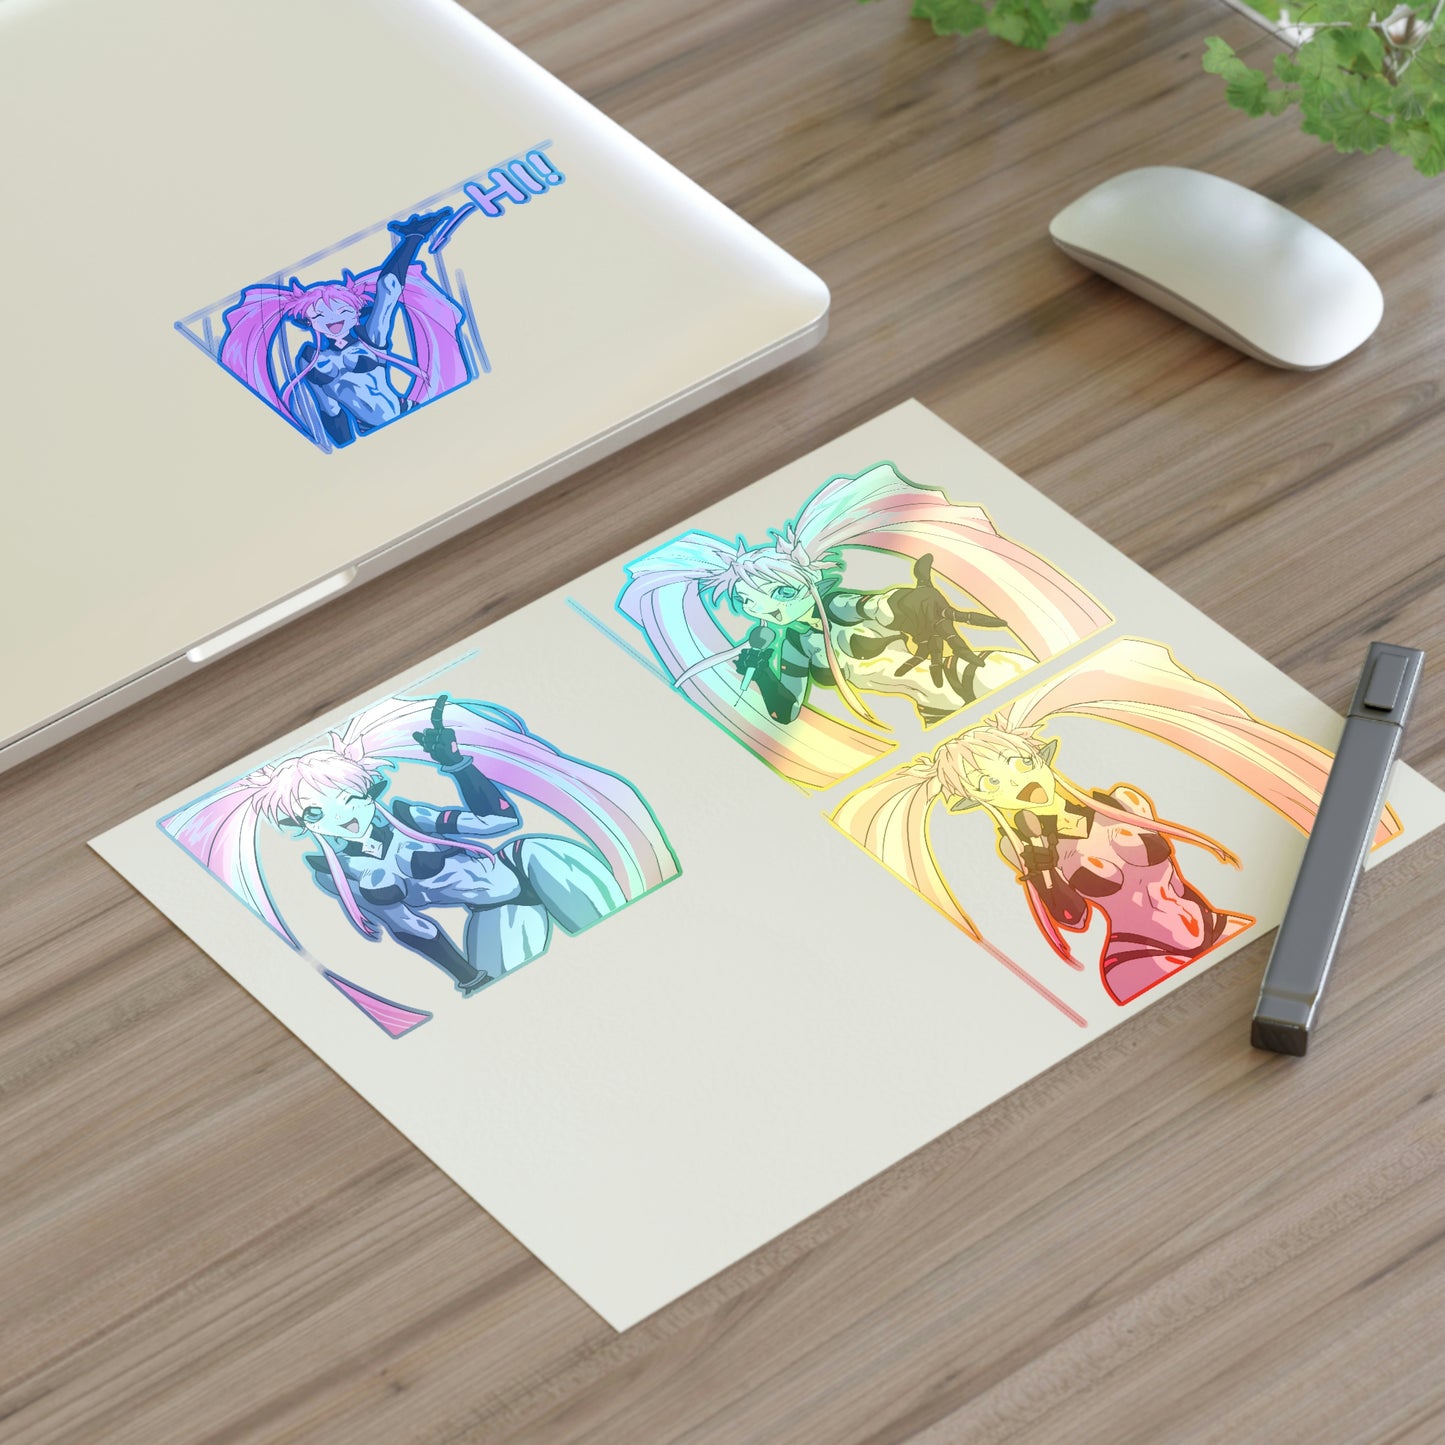 Yuimei super cute Sticker Sheets